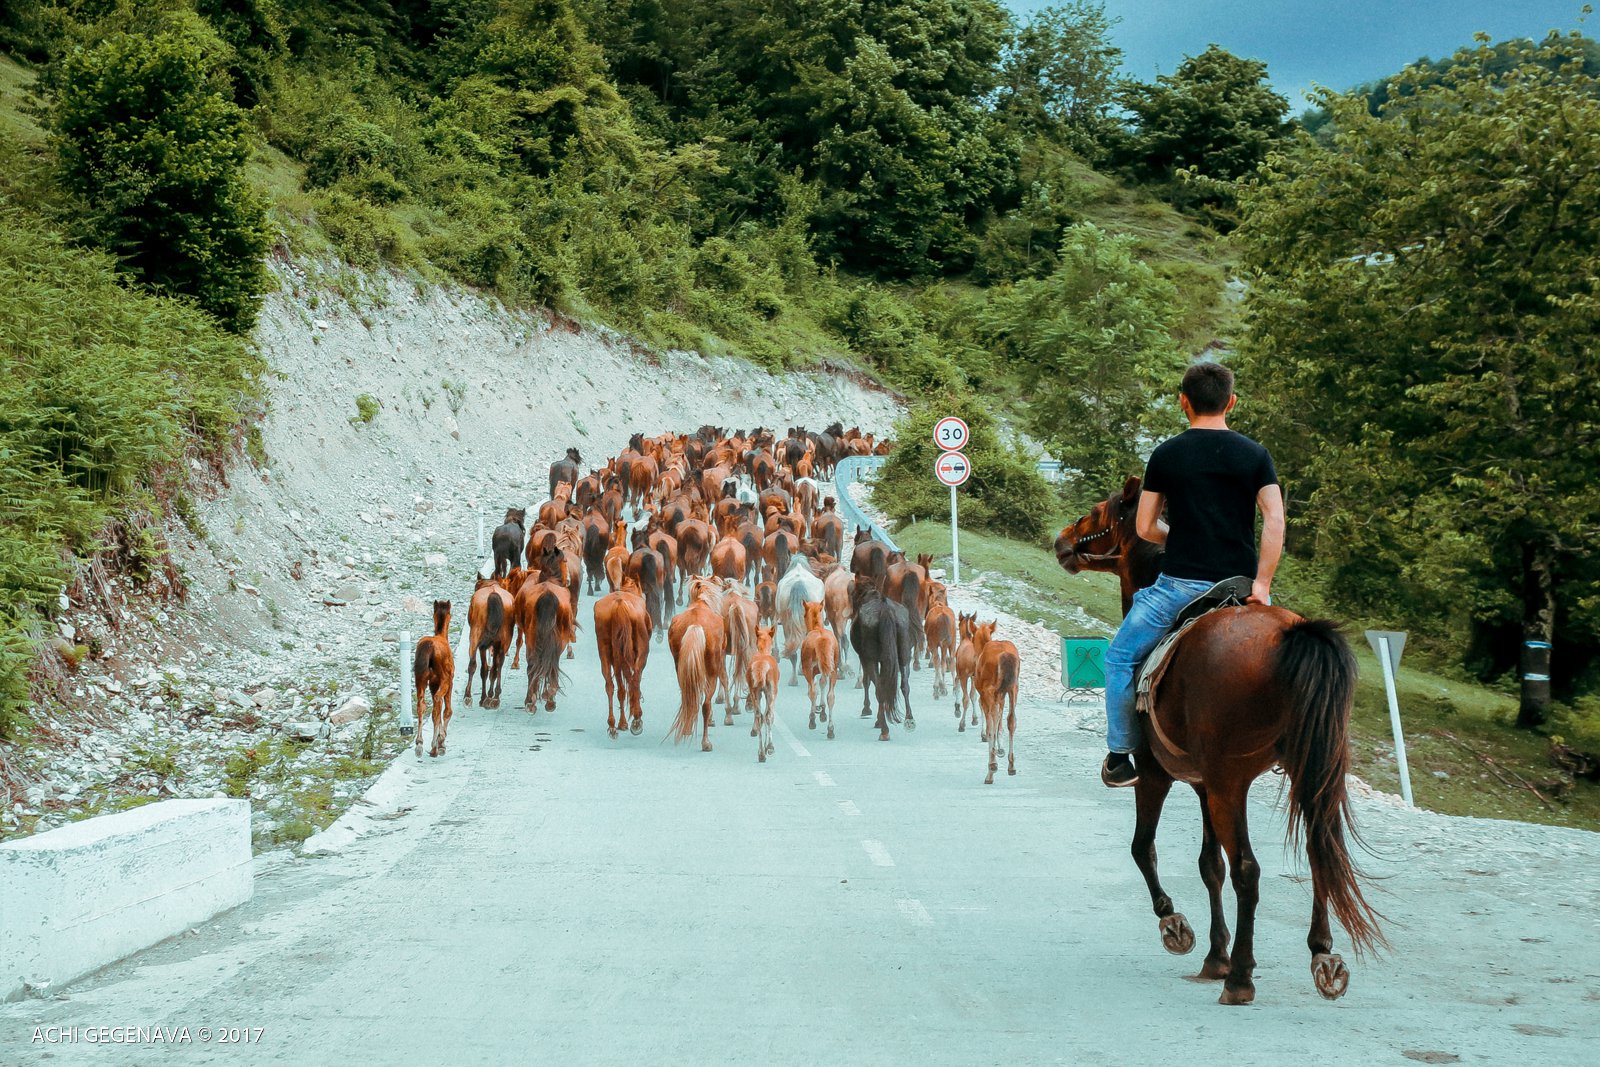 Georgia - Herd of horses